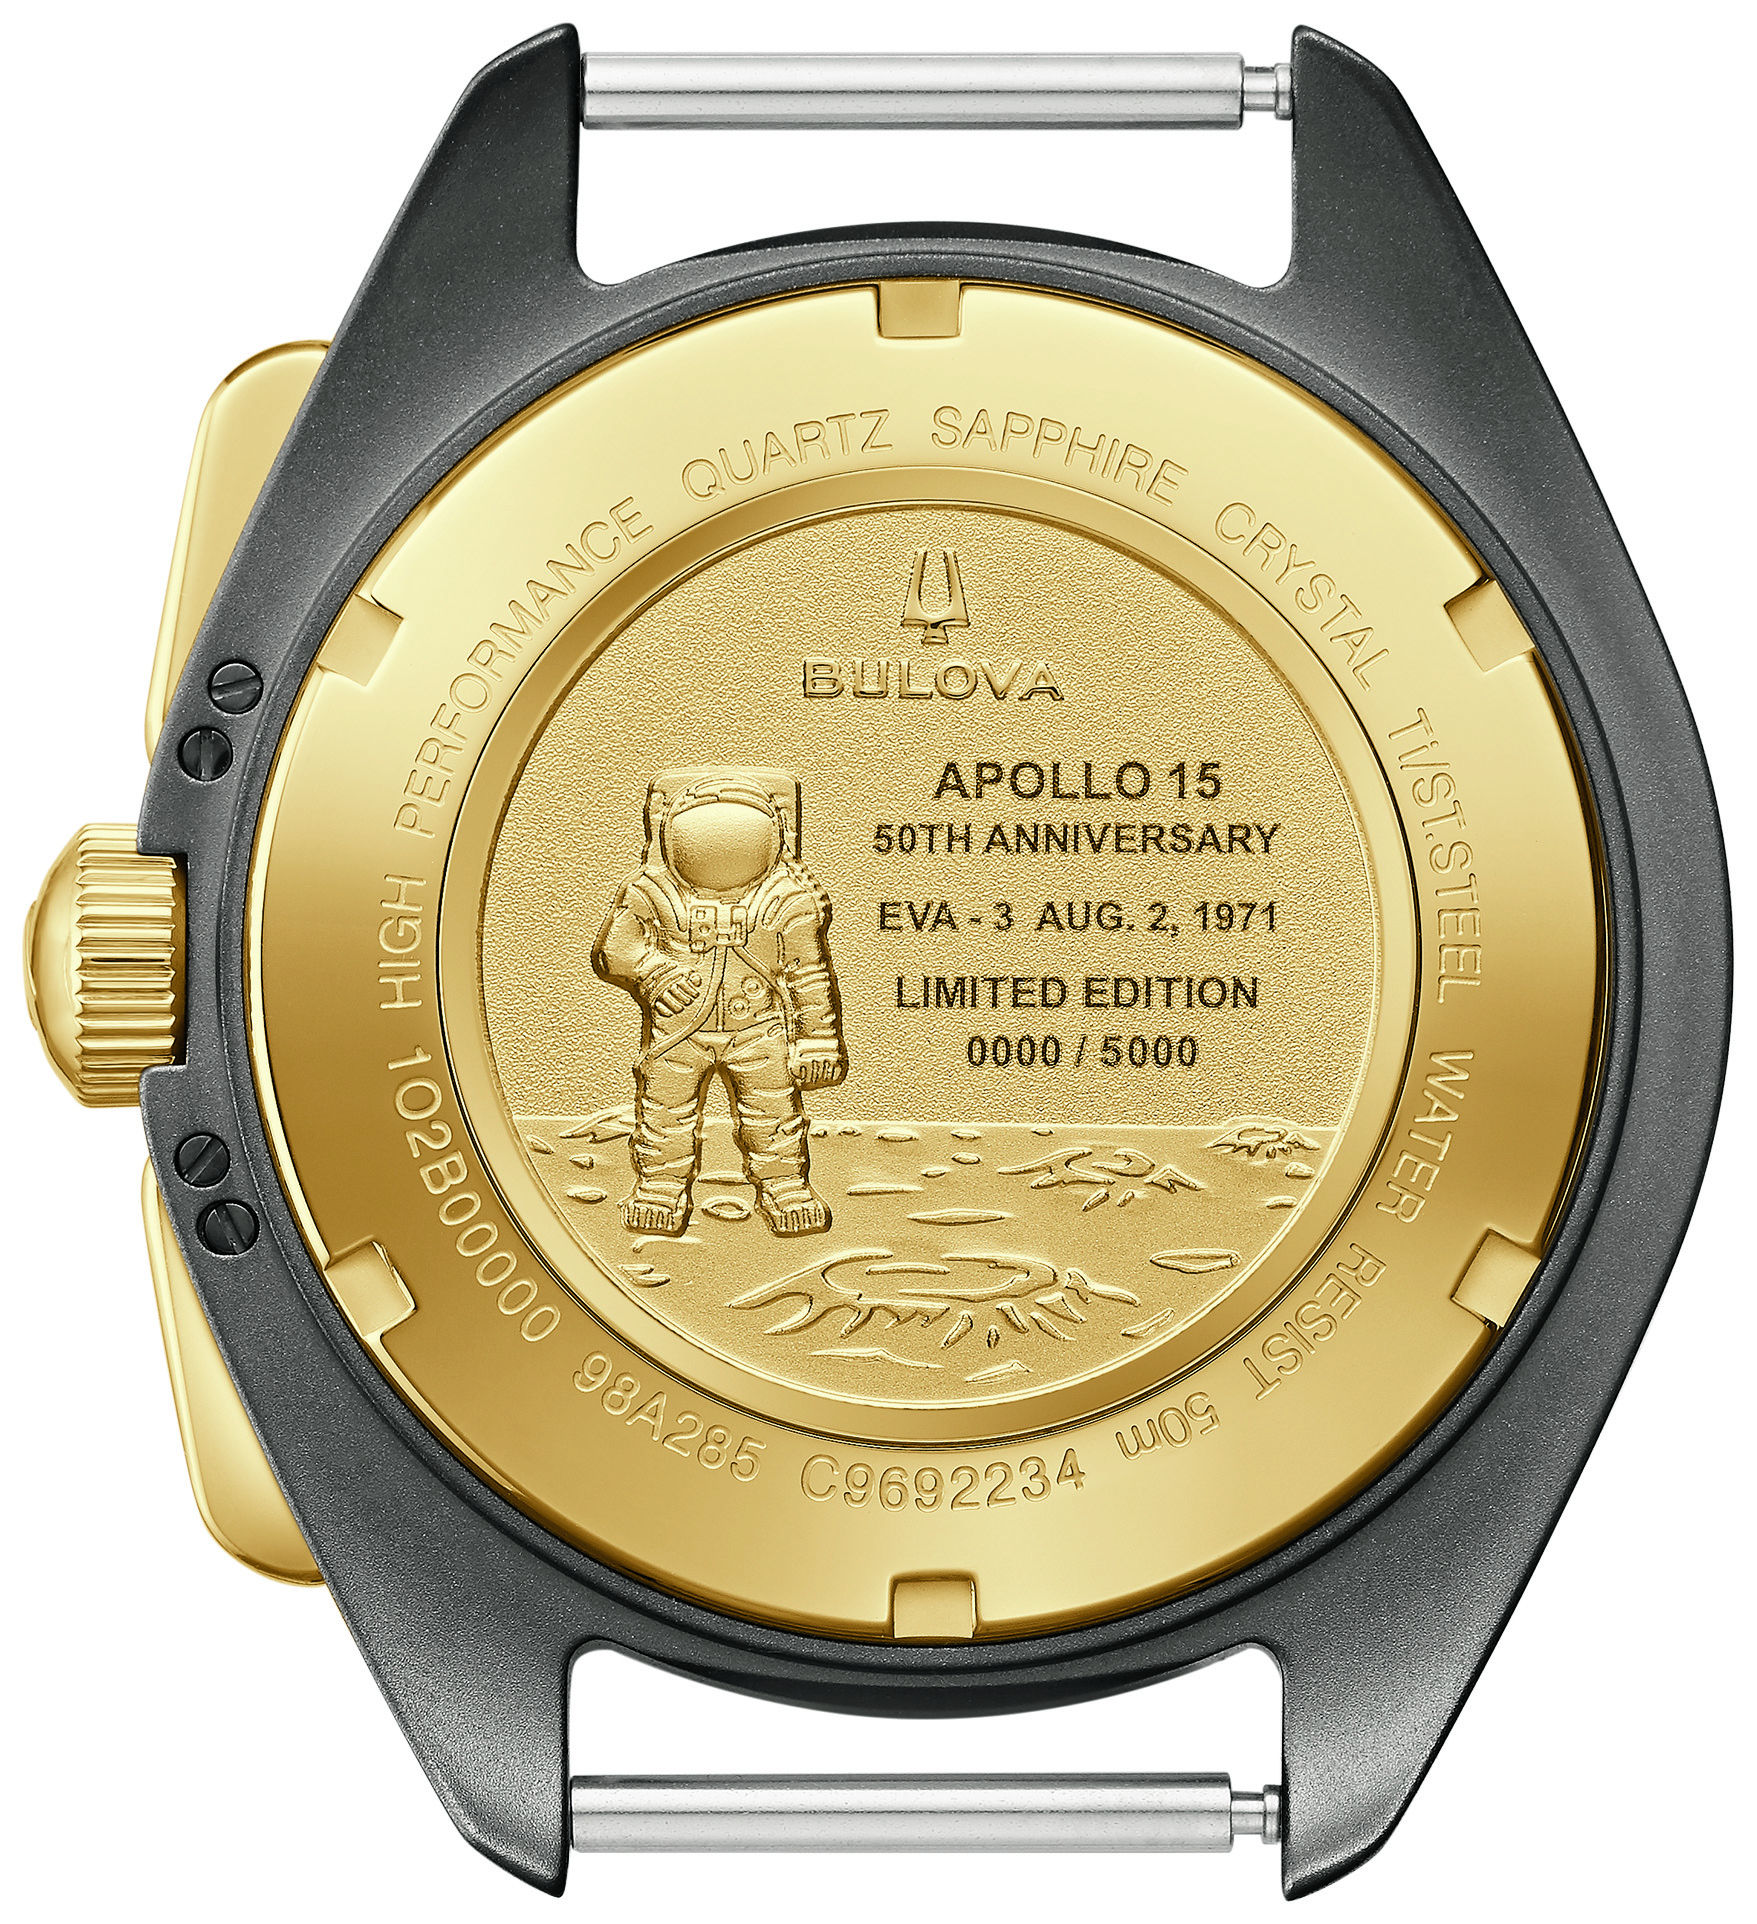 Bulova Lunar Watch in honor of Apollo 15